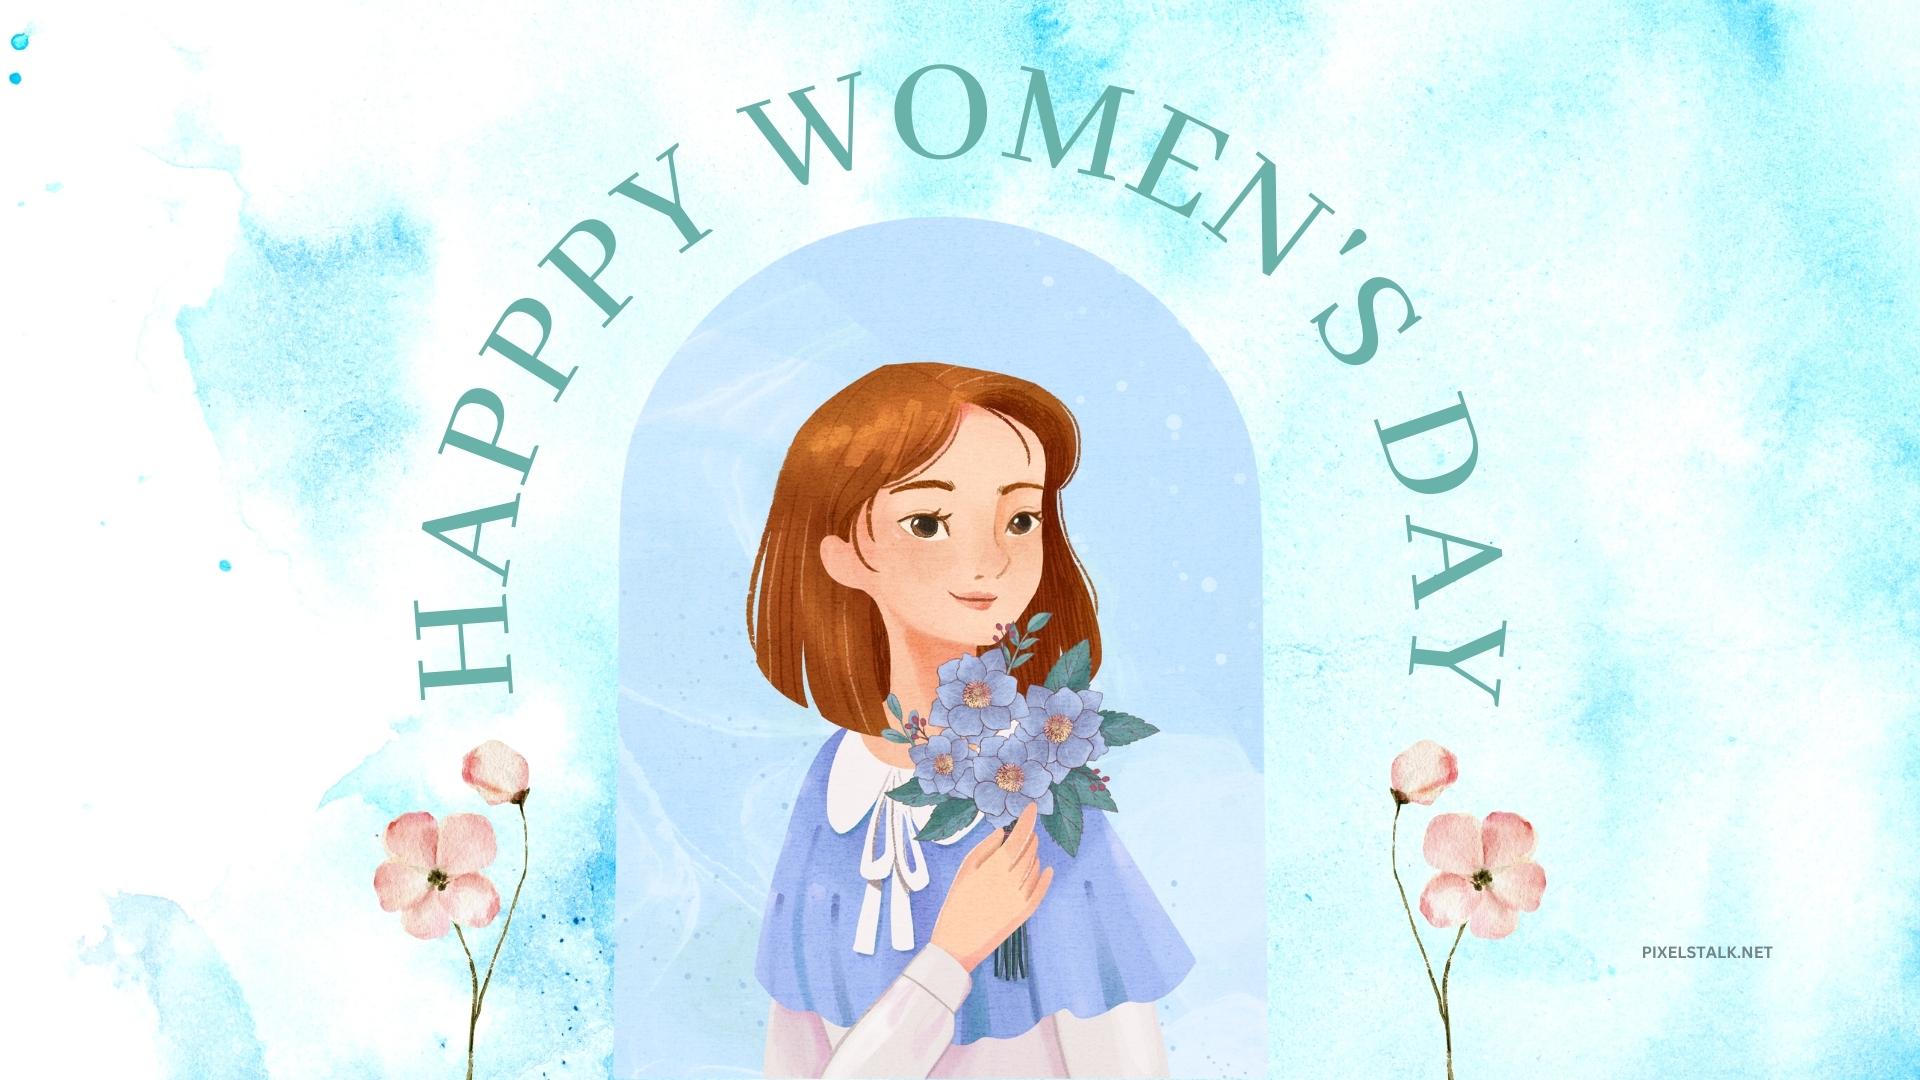 Womens Day Desktop Image Free Download .